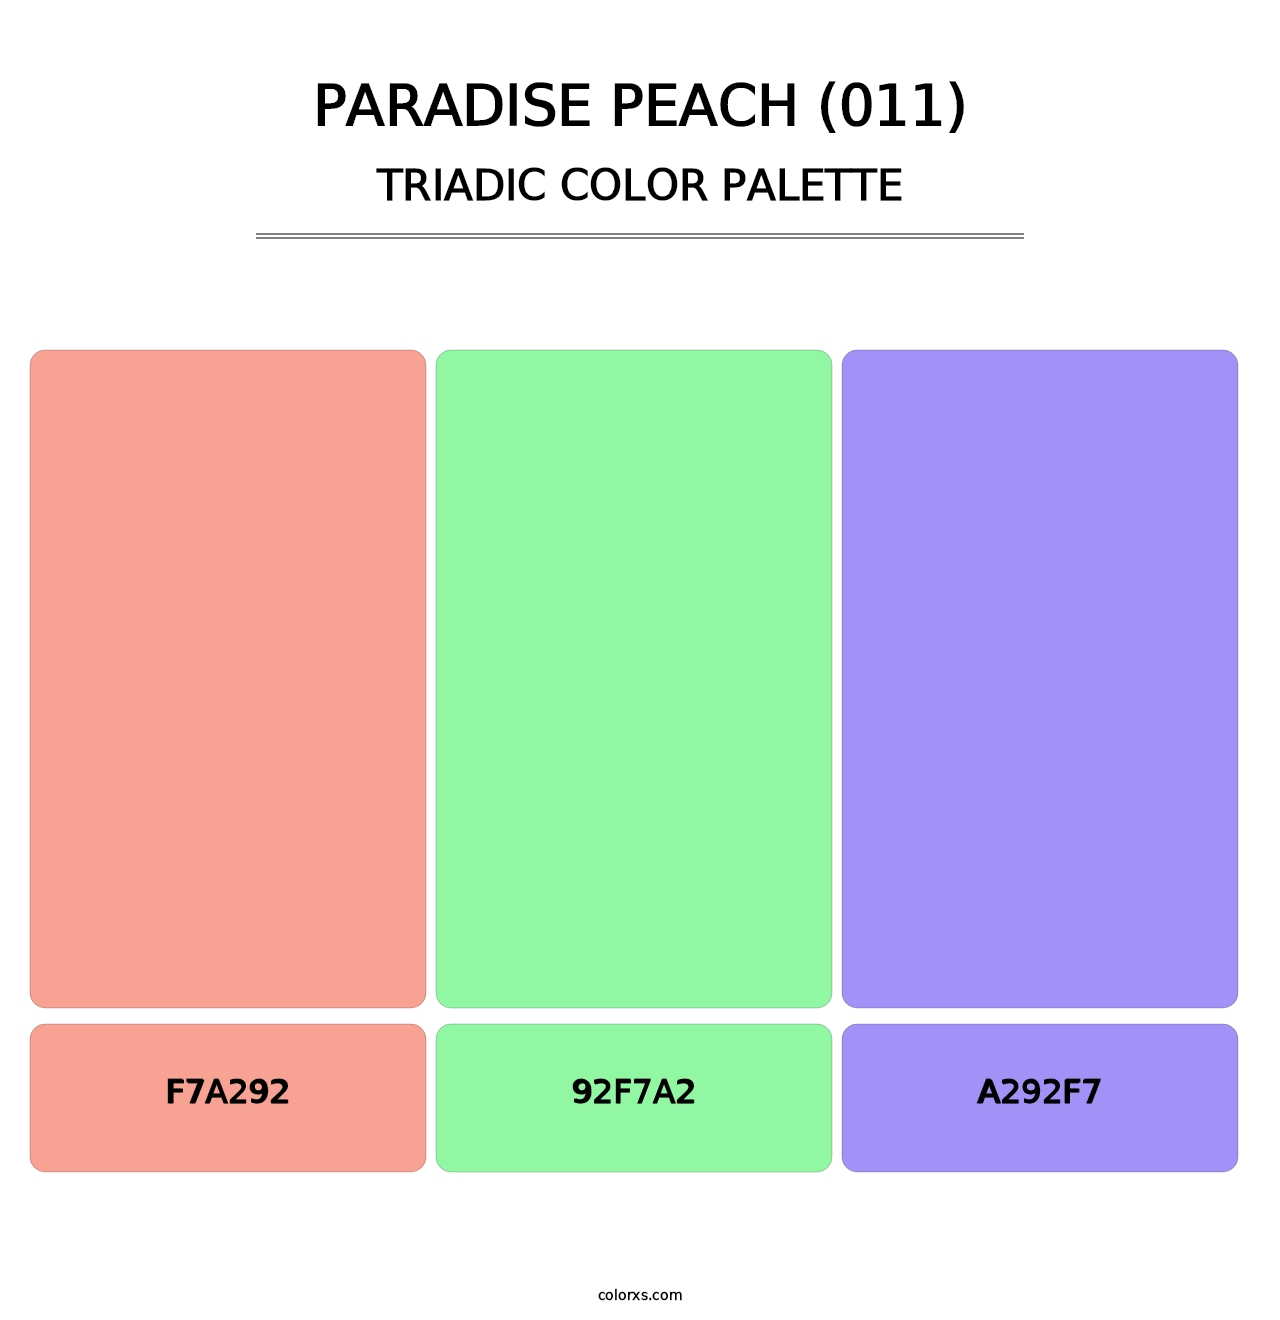 Paradise Peach (011) - Triadic Color Palette